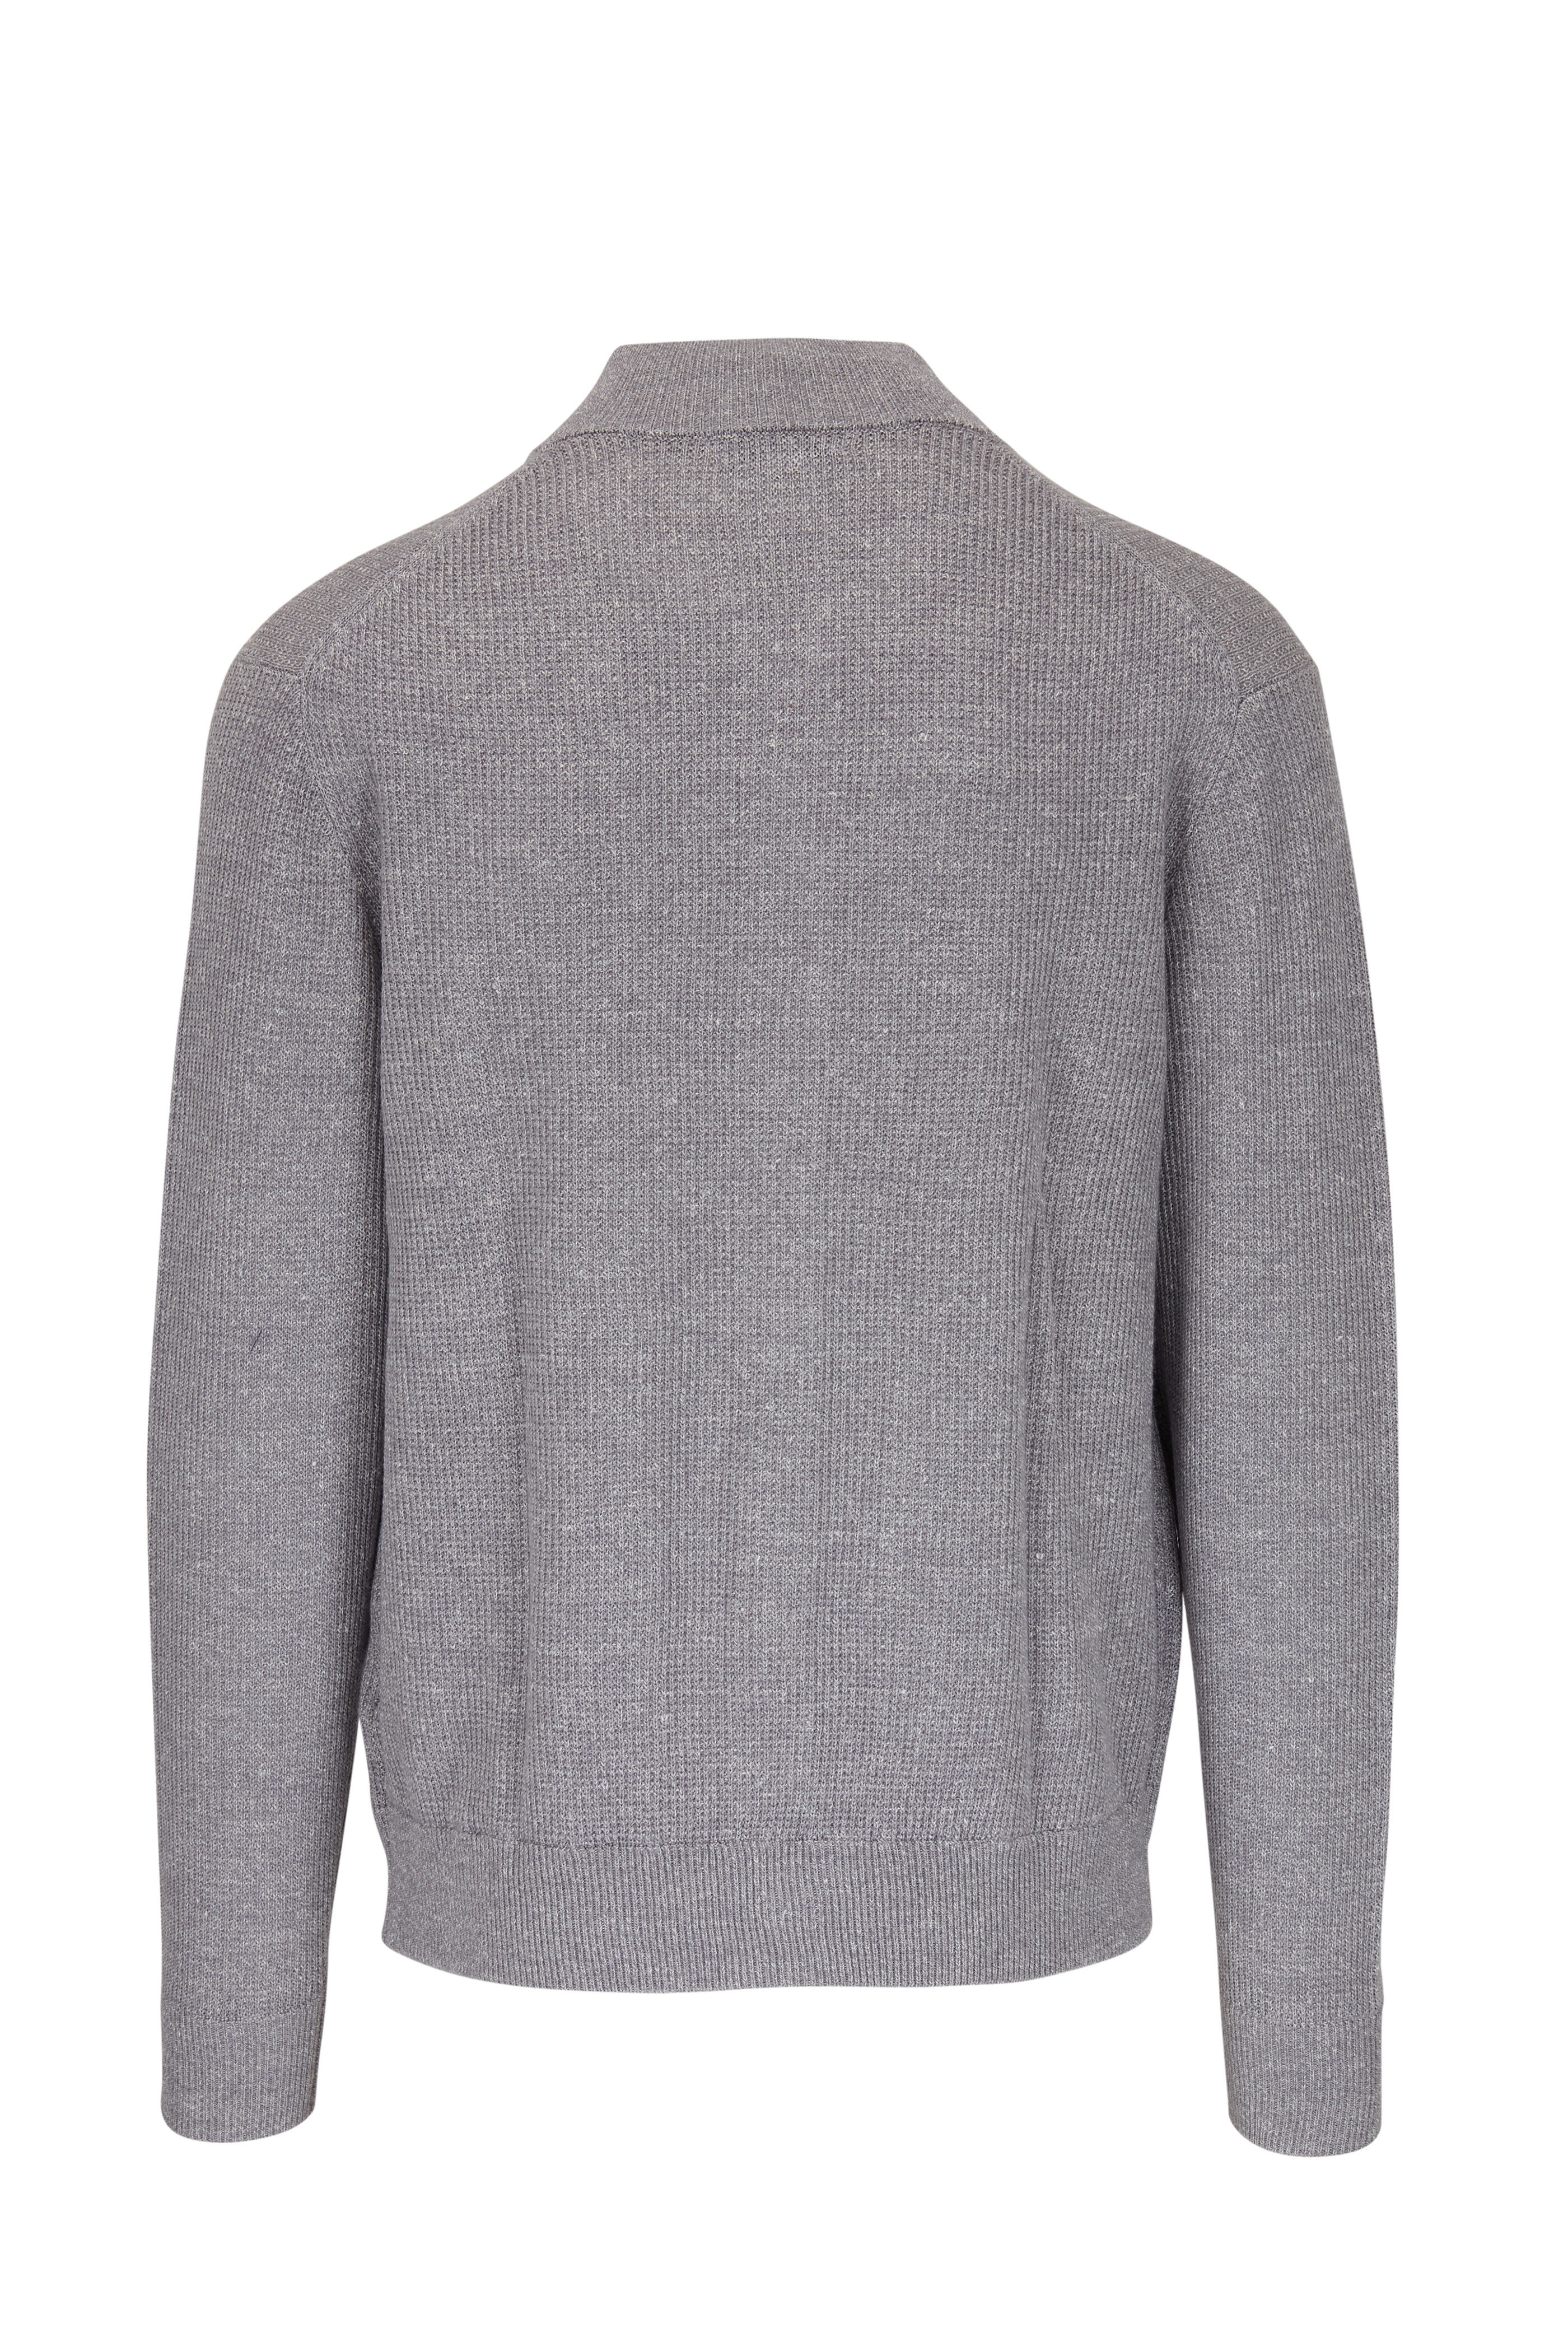 Peter Millar - Coastal Gray Wool & Linen Front Button Cardigan